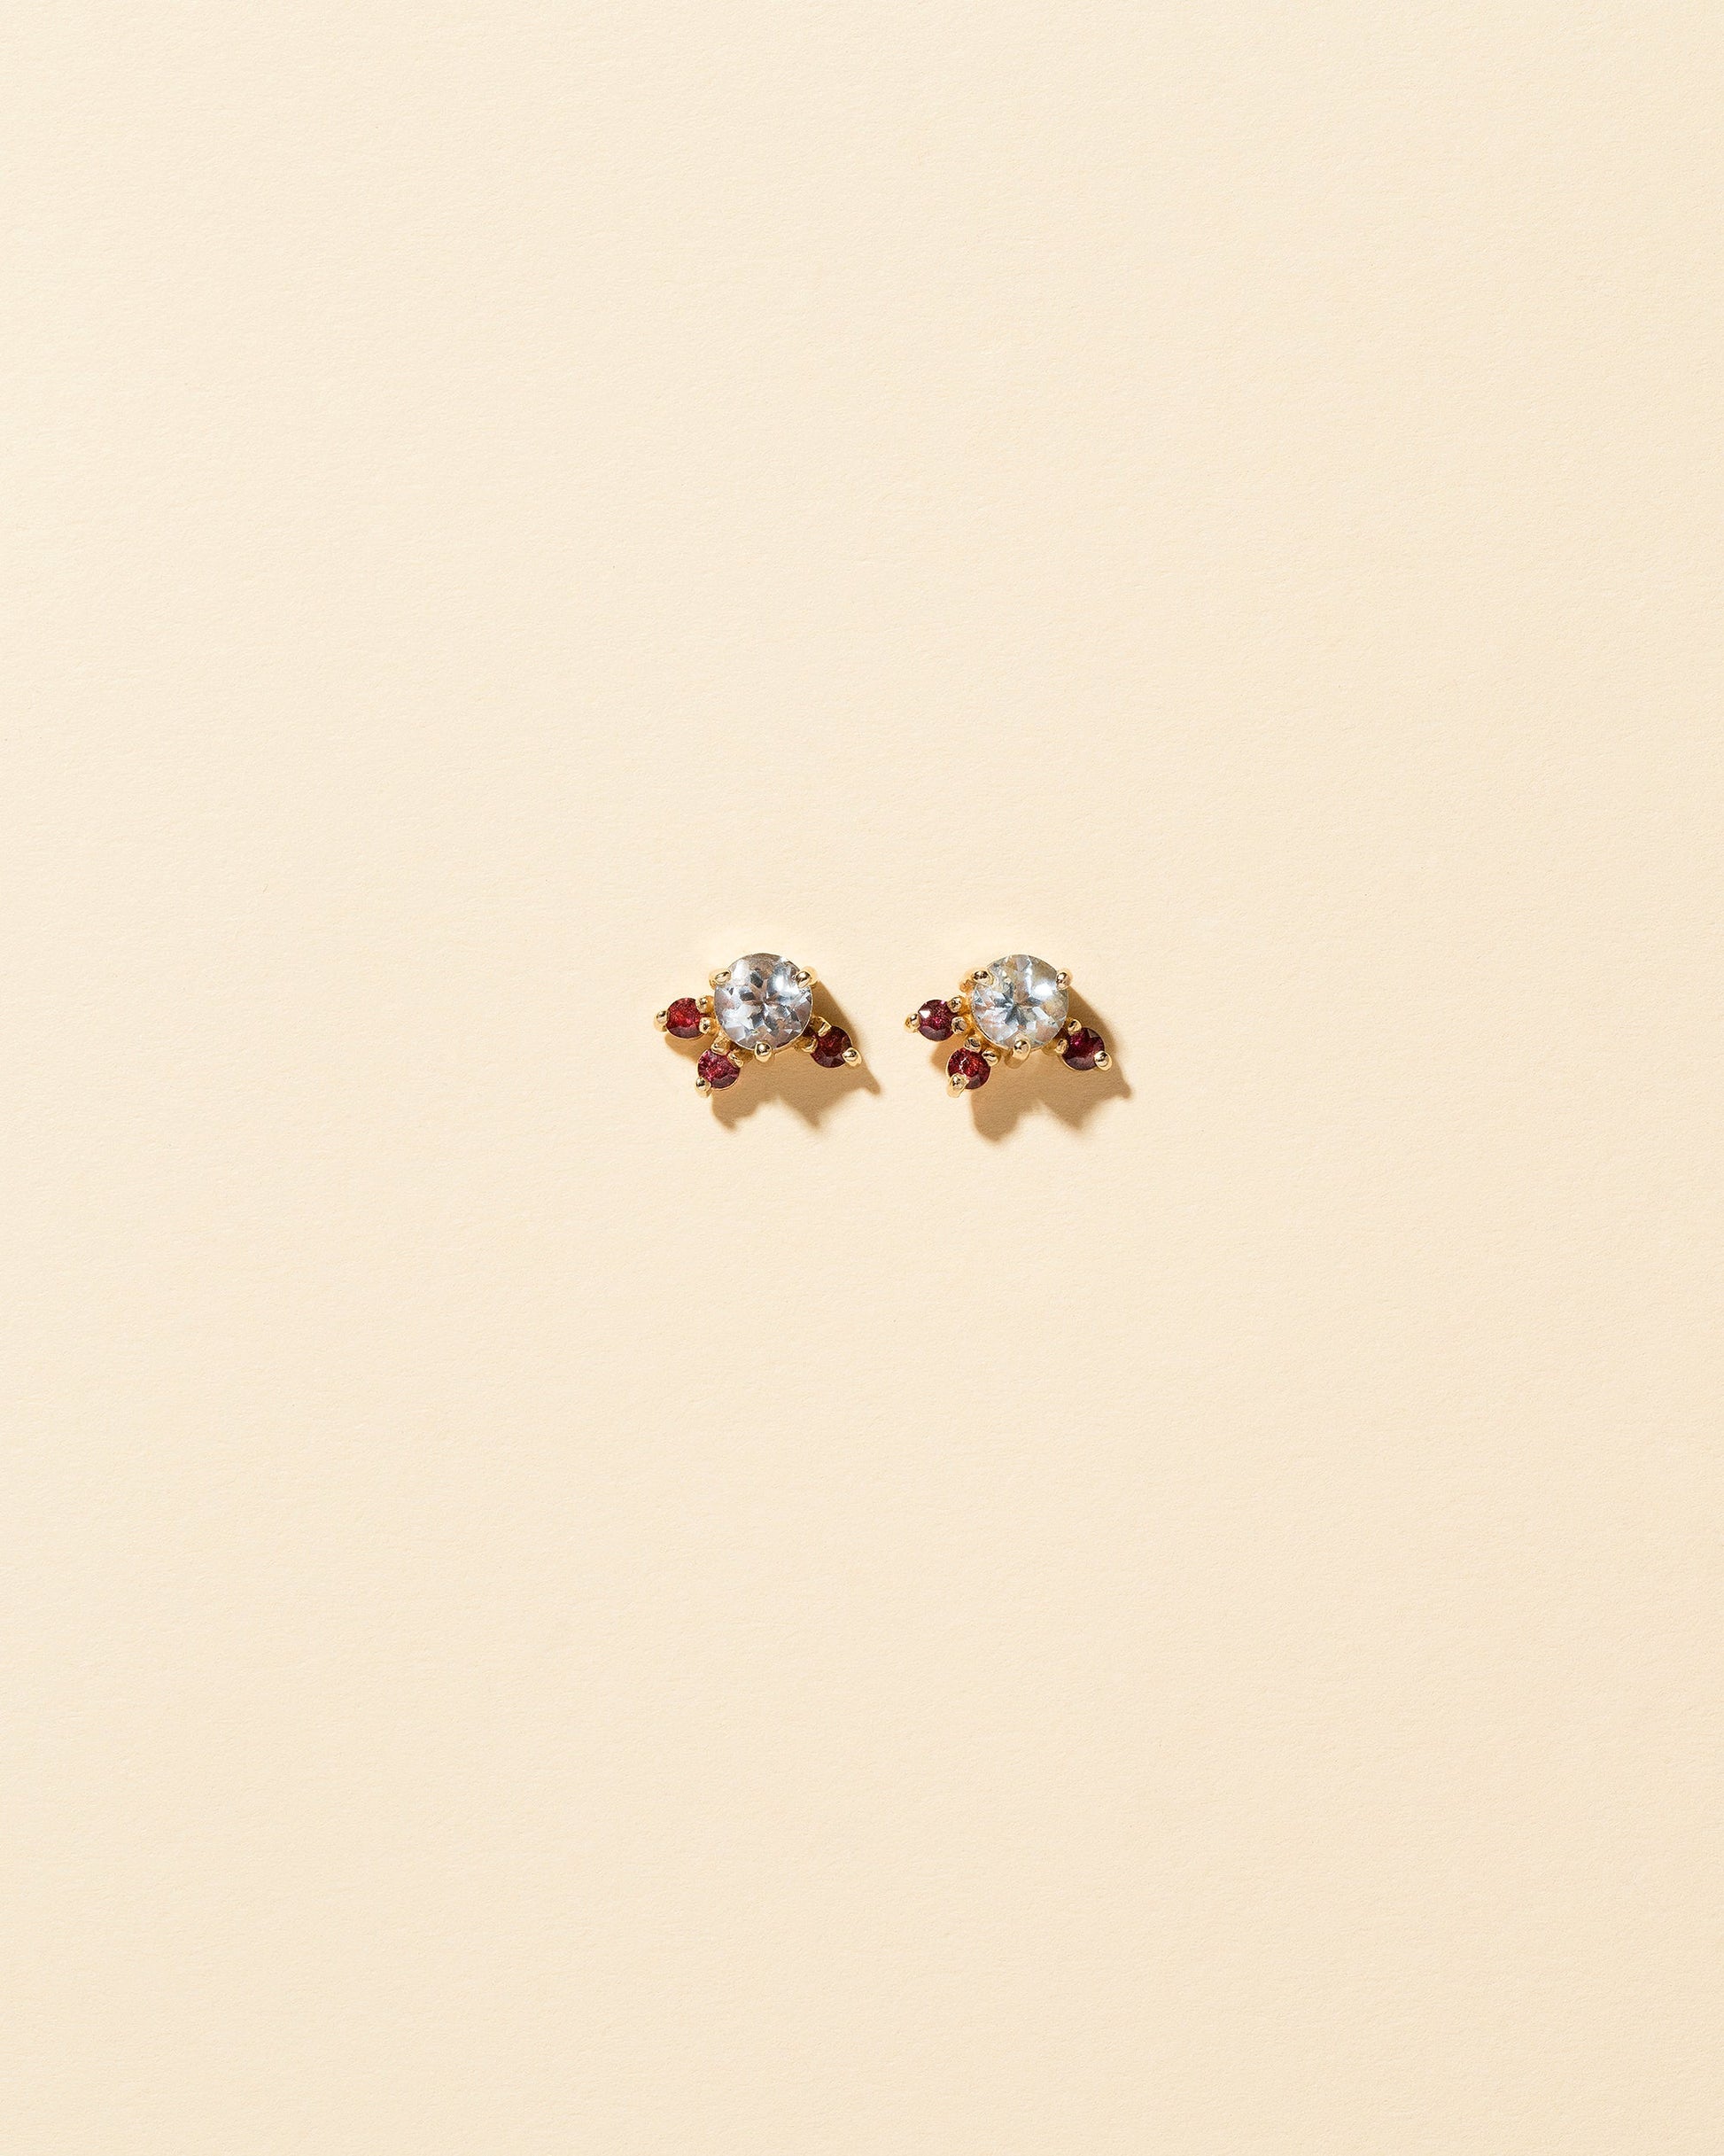  Aquamarine & Garnet Earrings on light color background.